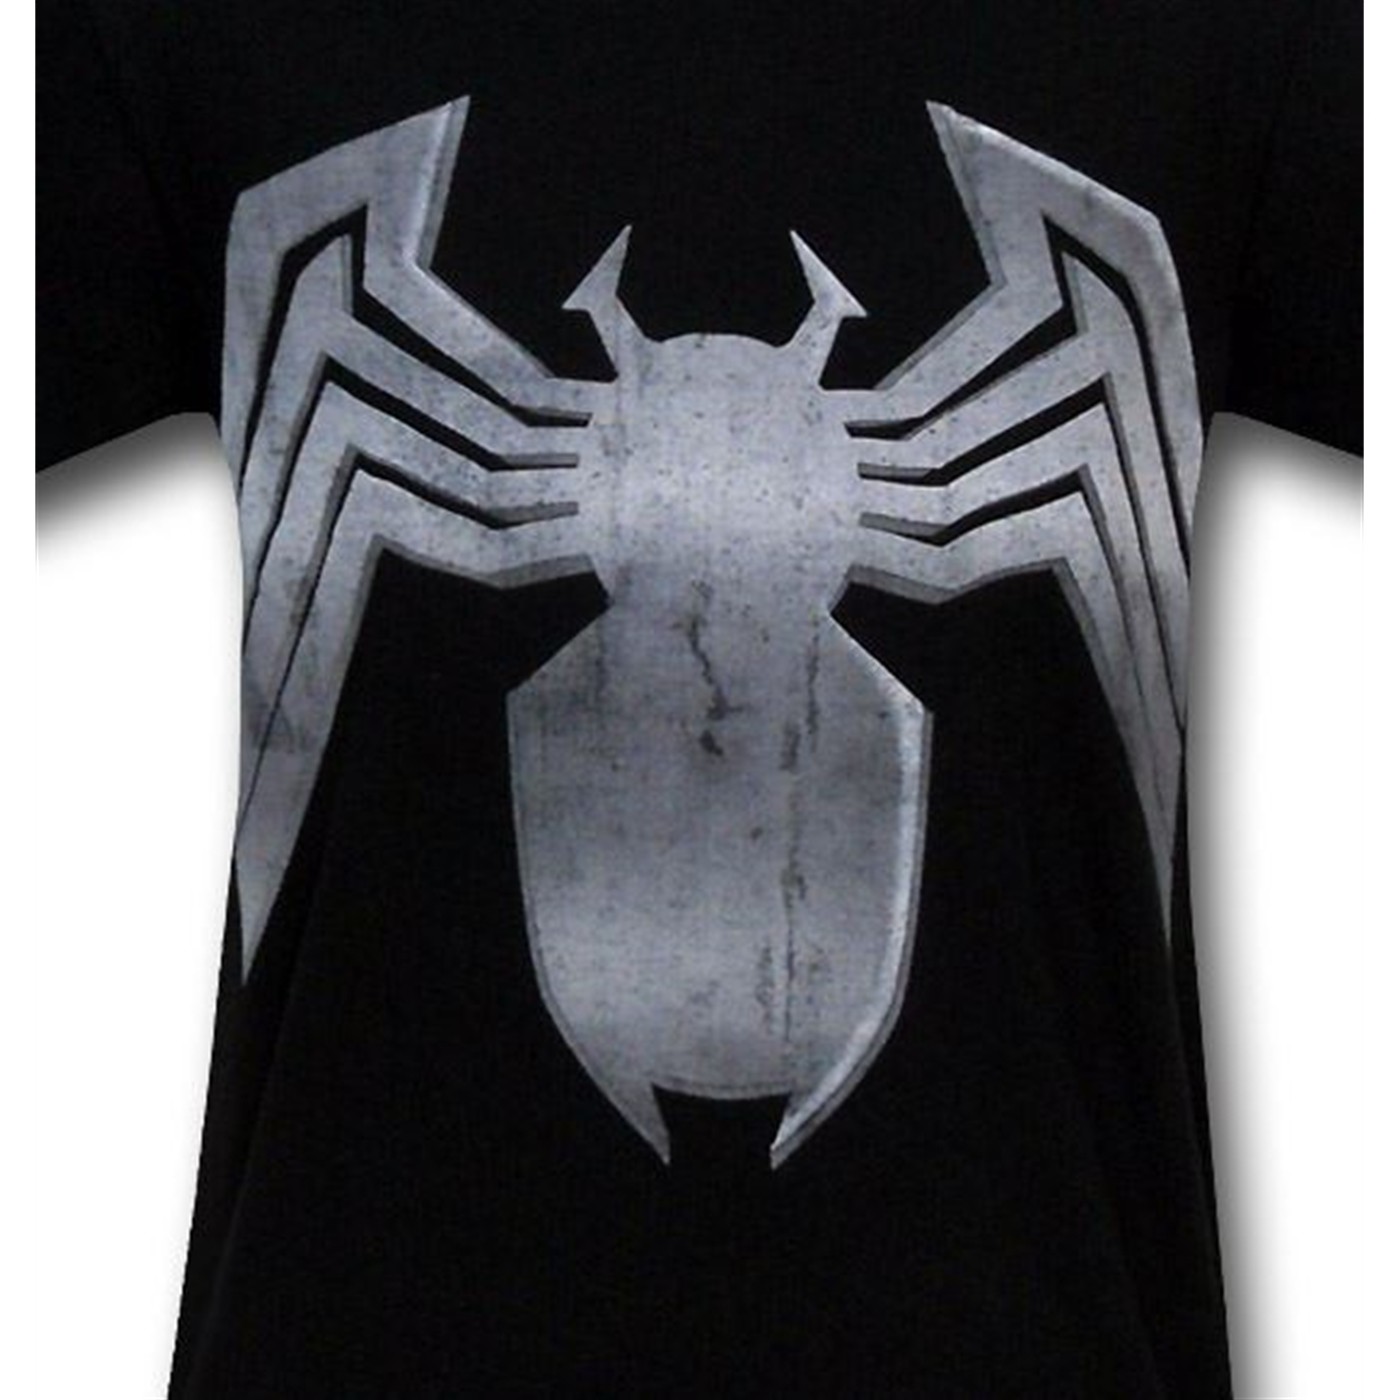 Venom Silver Distressed Symbol T-Shirt